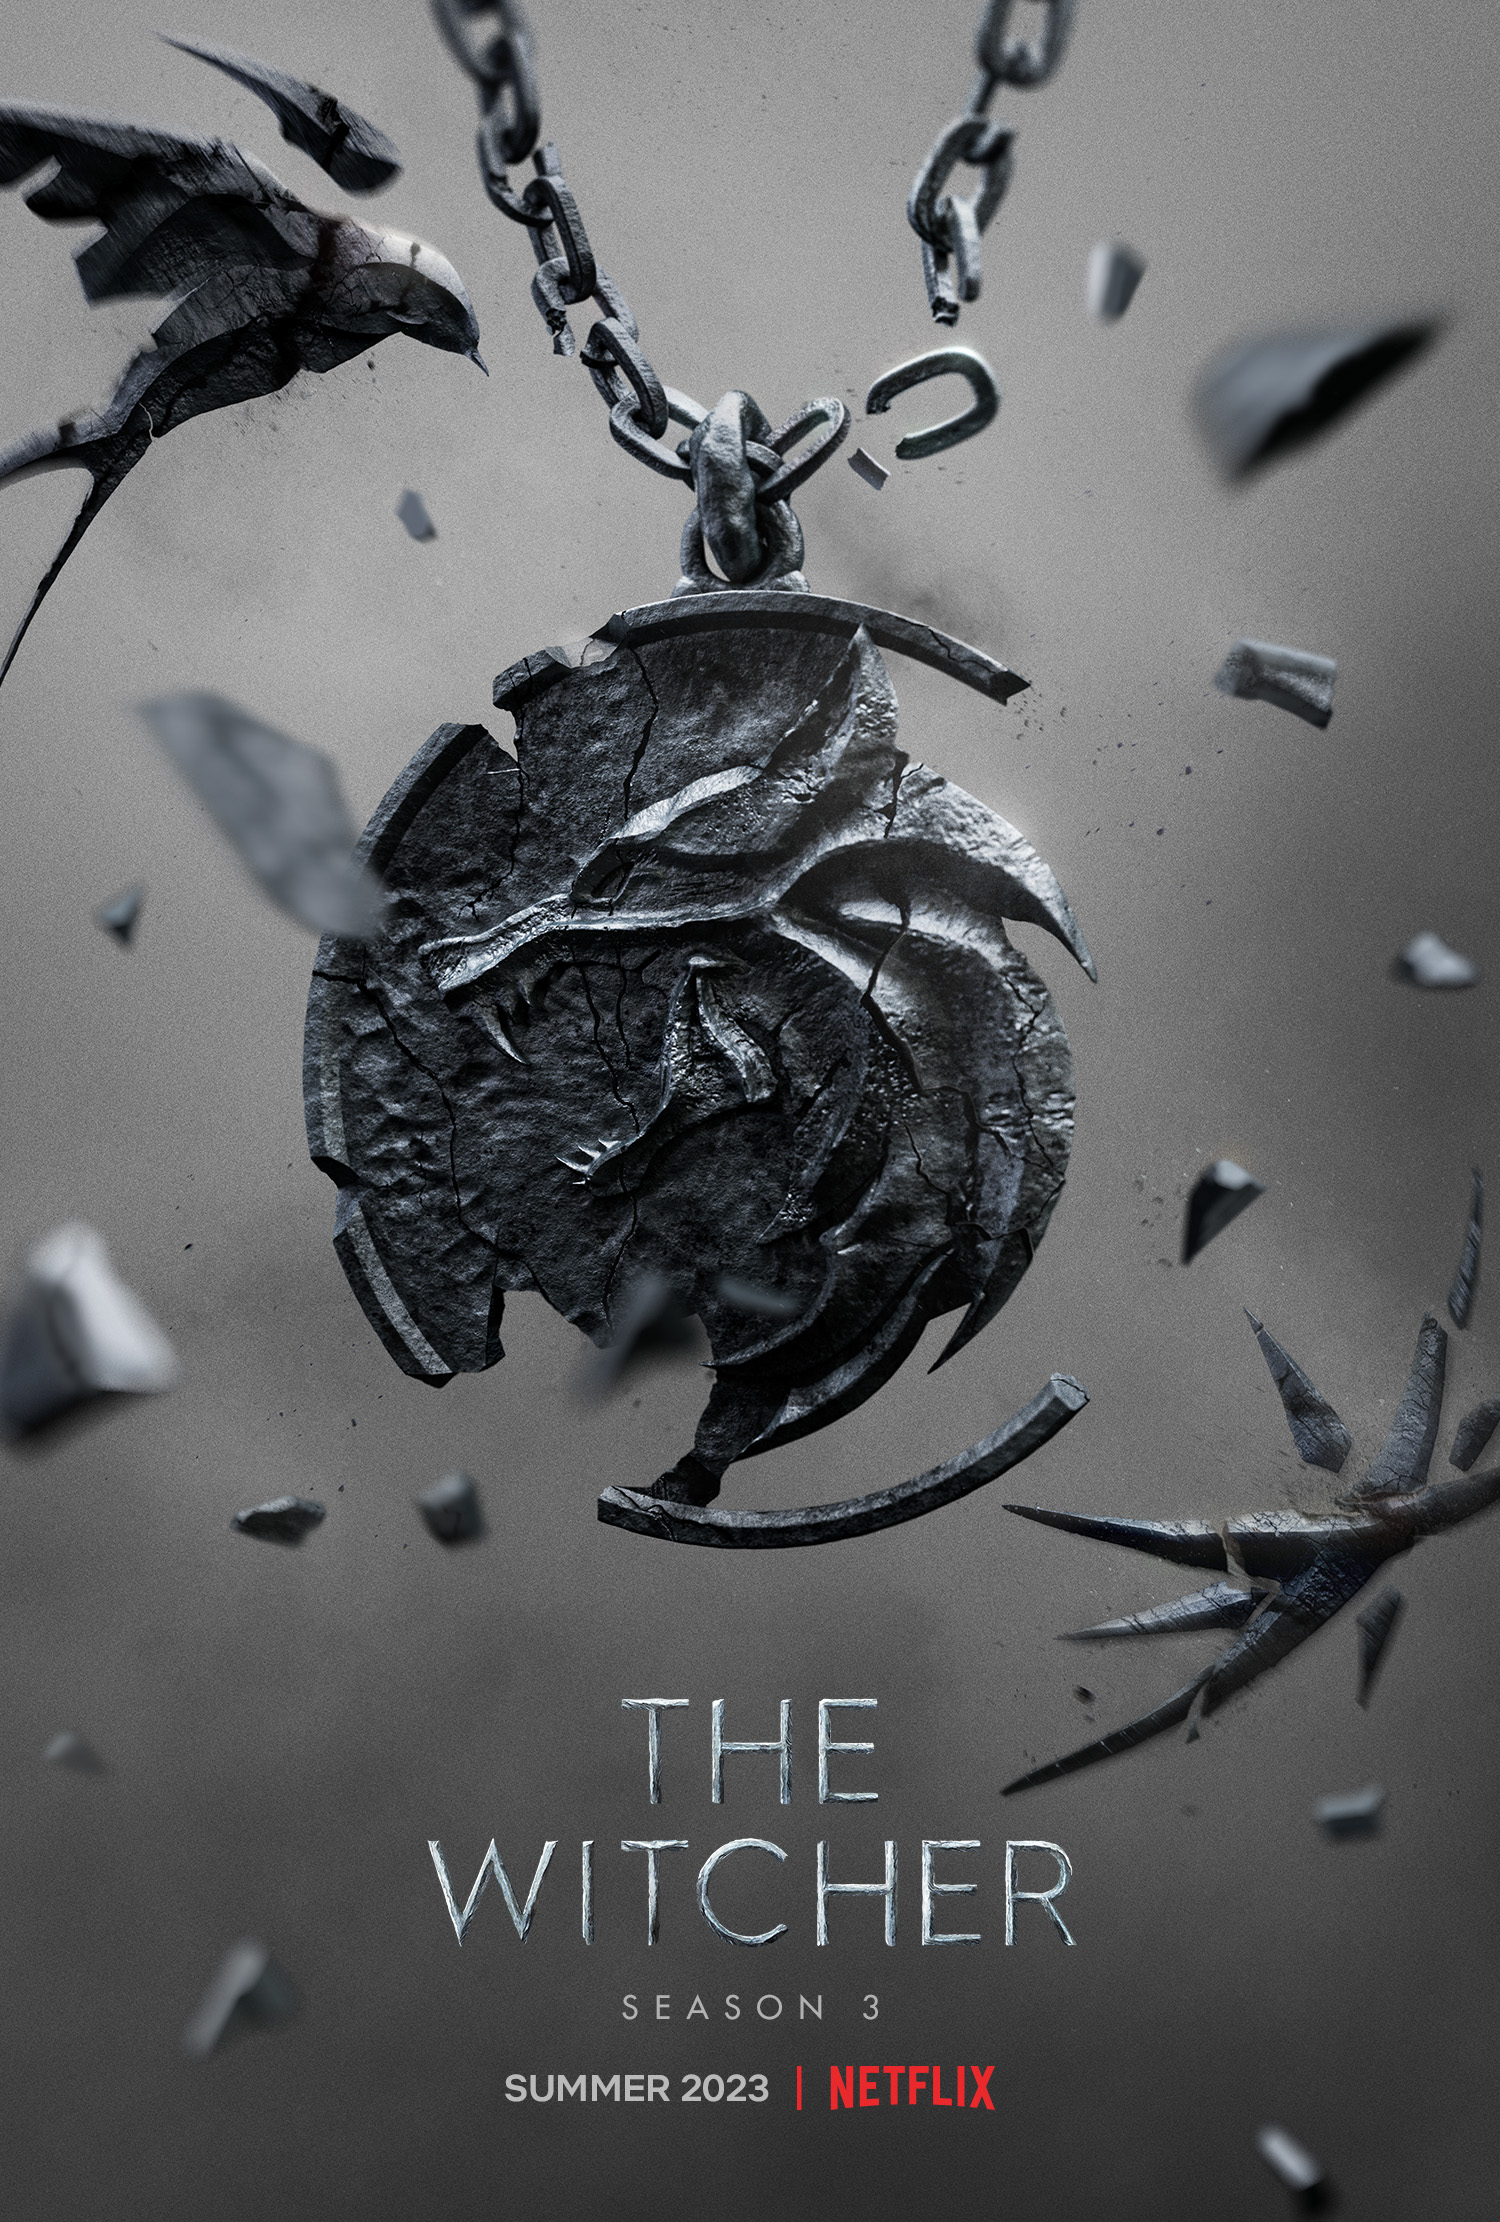 The Witcher Season 3, Official Trailer Releasing Soon, Netflix